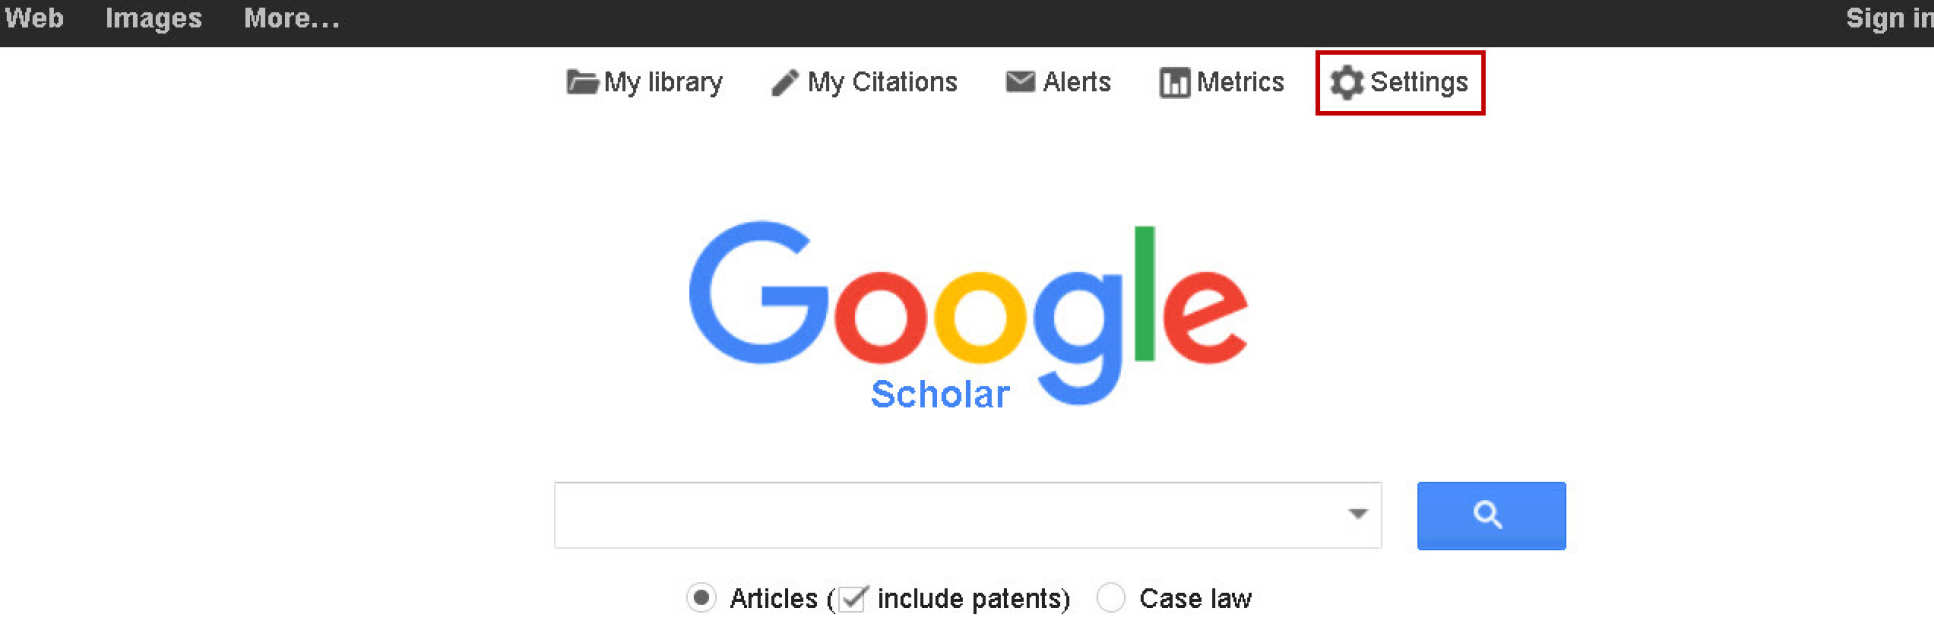 Screen image showing Google settings